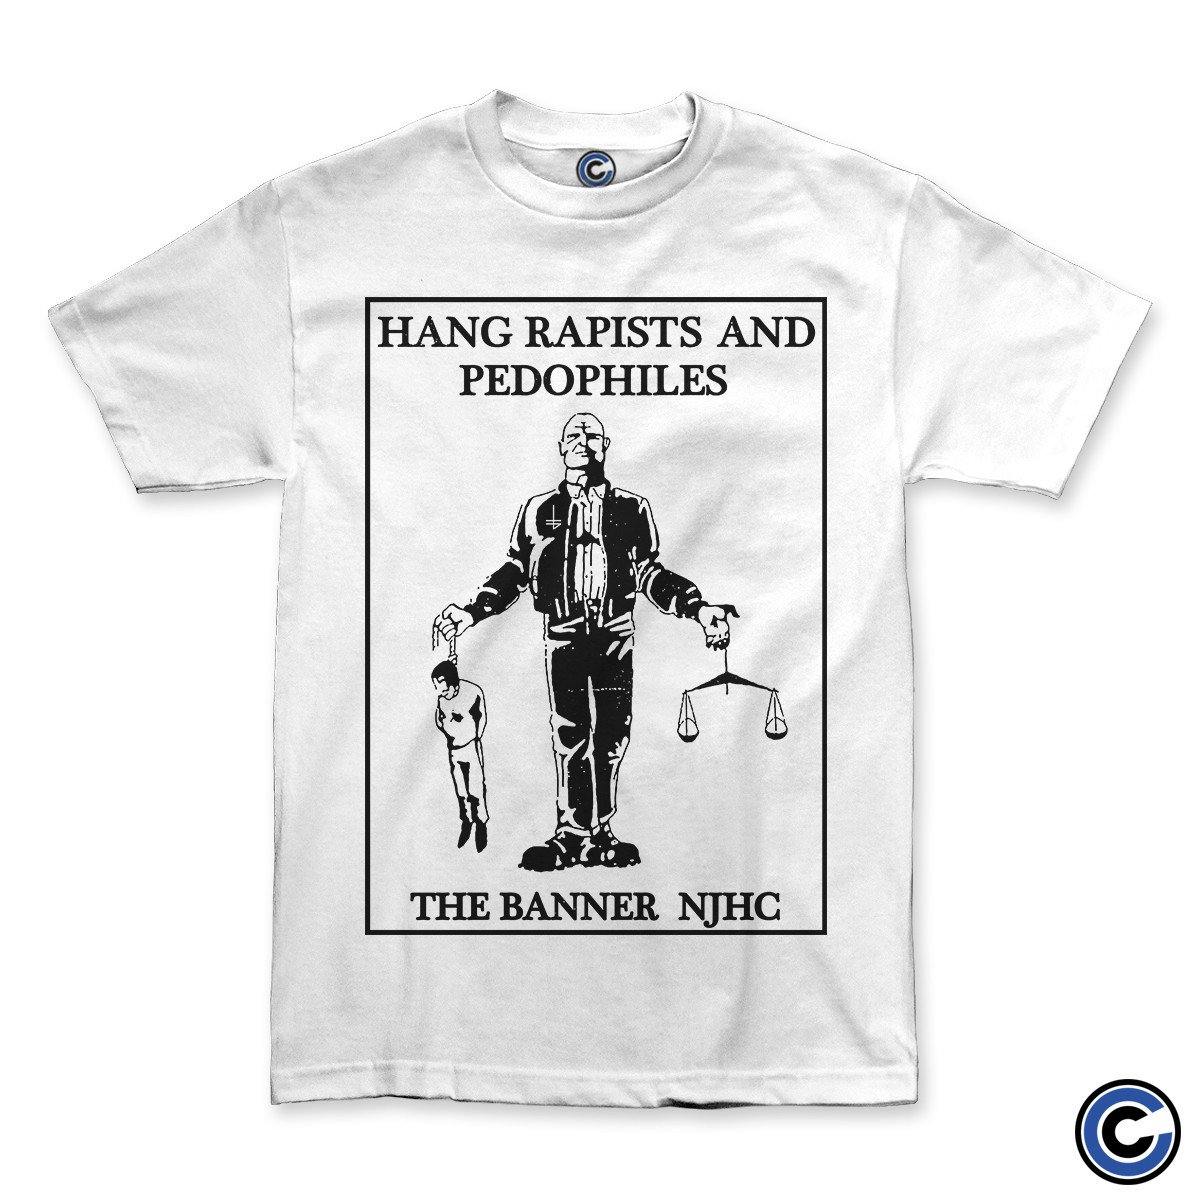 Buy – The Banner "Hang Rapists" Shirt – Band & Music Merch – Cold Cuts Merch